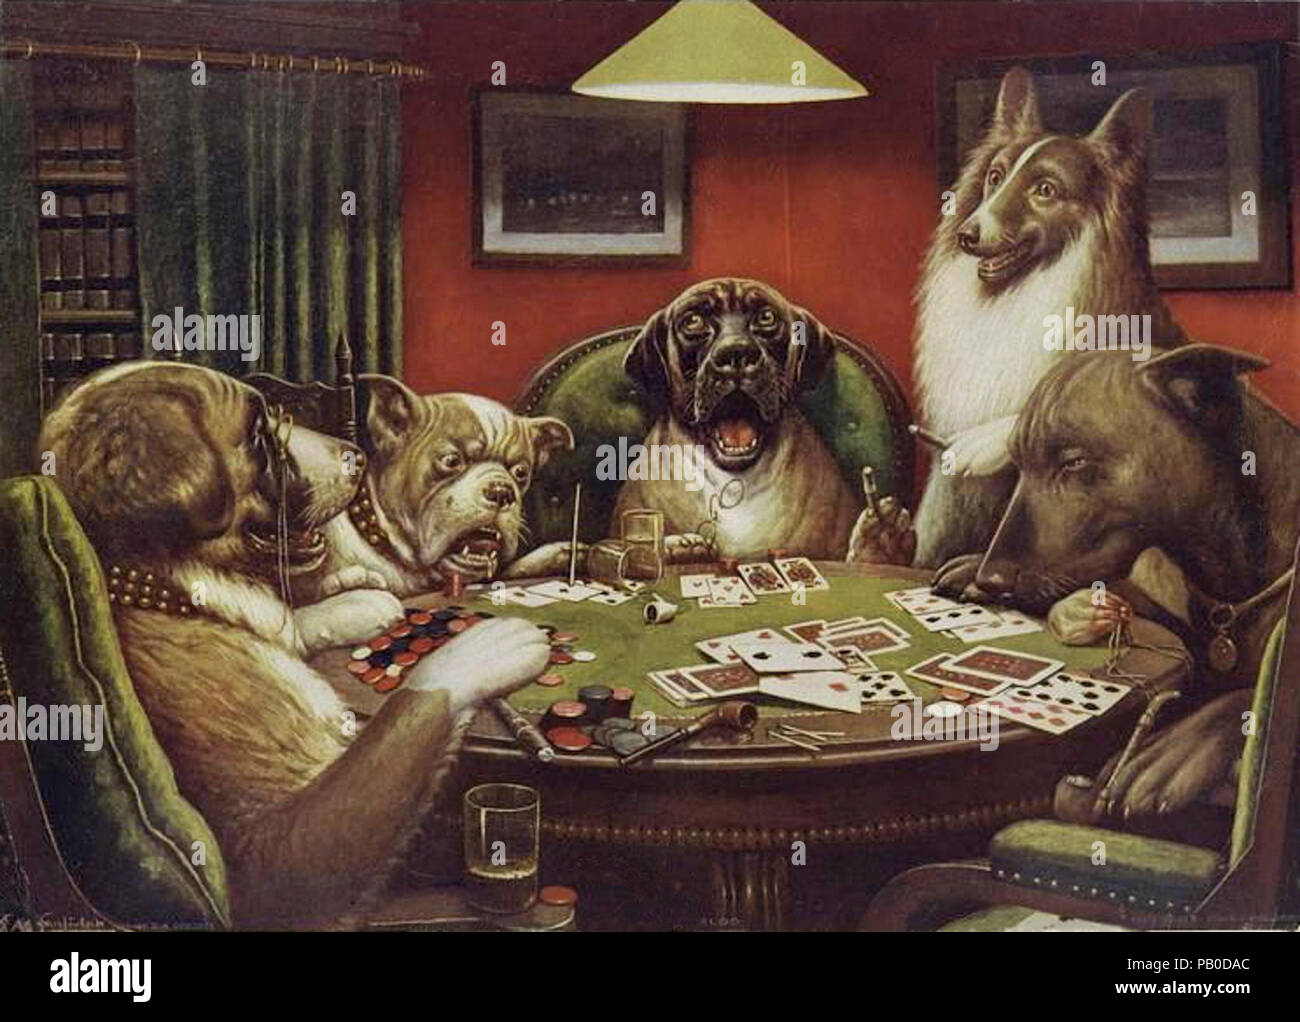 A Waterloo Dogs Playing Poker 2 Stock Photo - Alamy